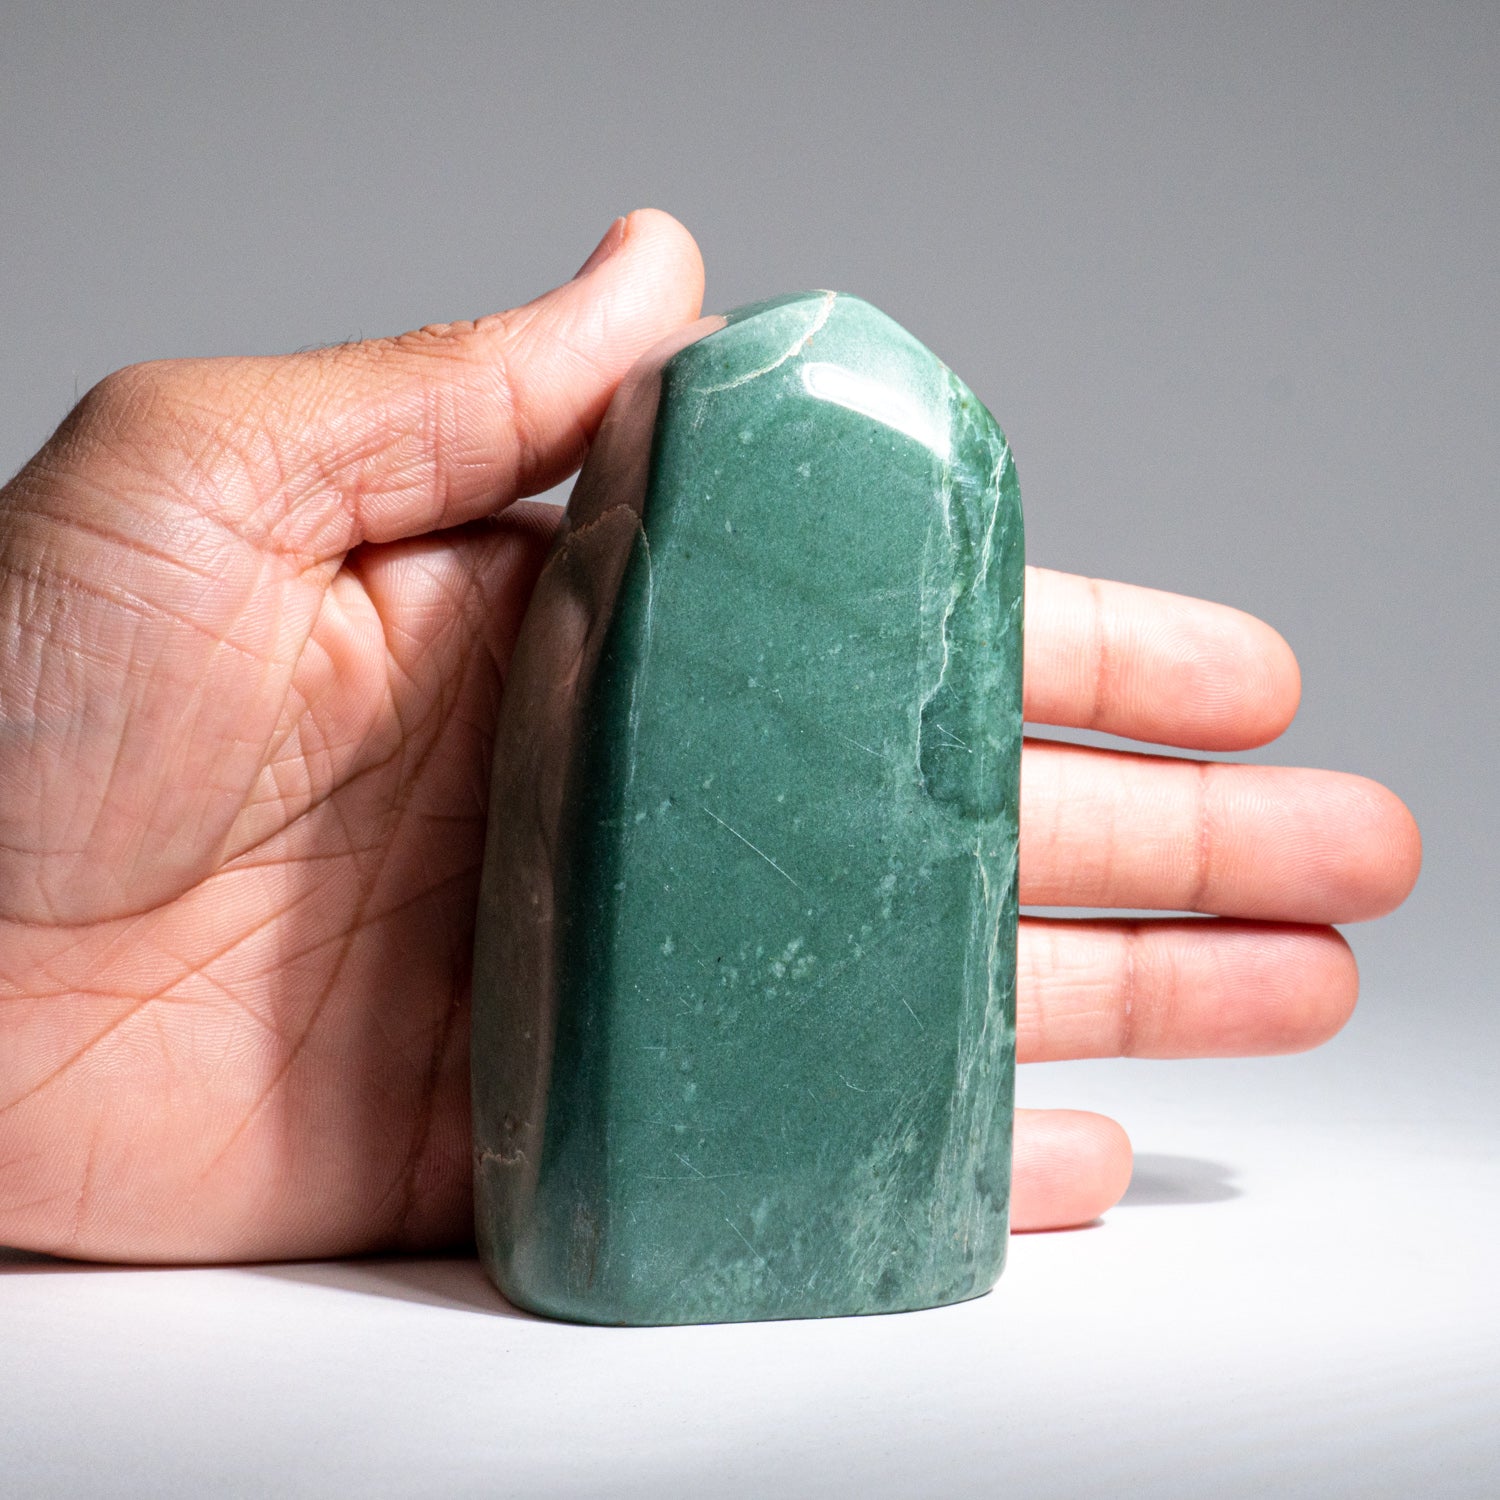 Polished Nephrite Jade Freeform from Pakistan (511.8 grams)